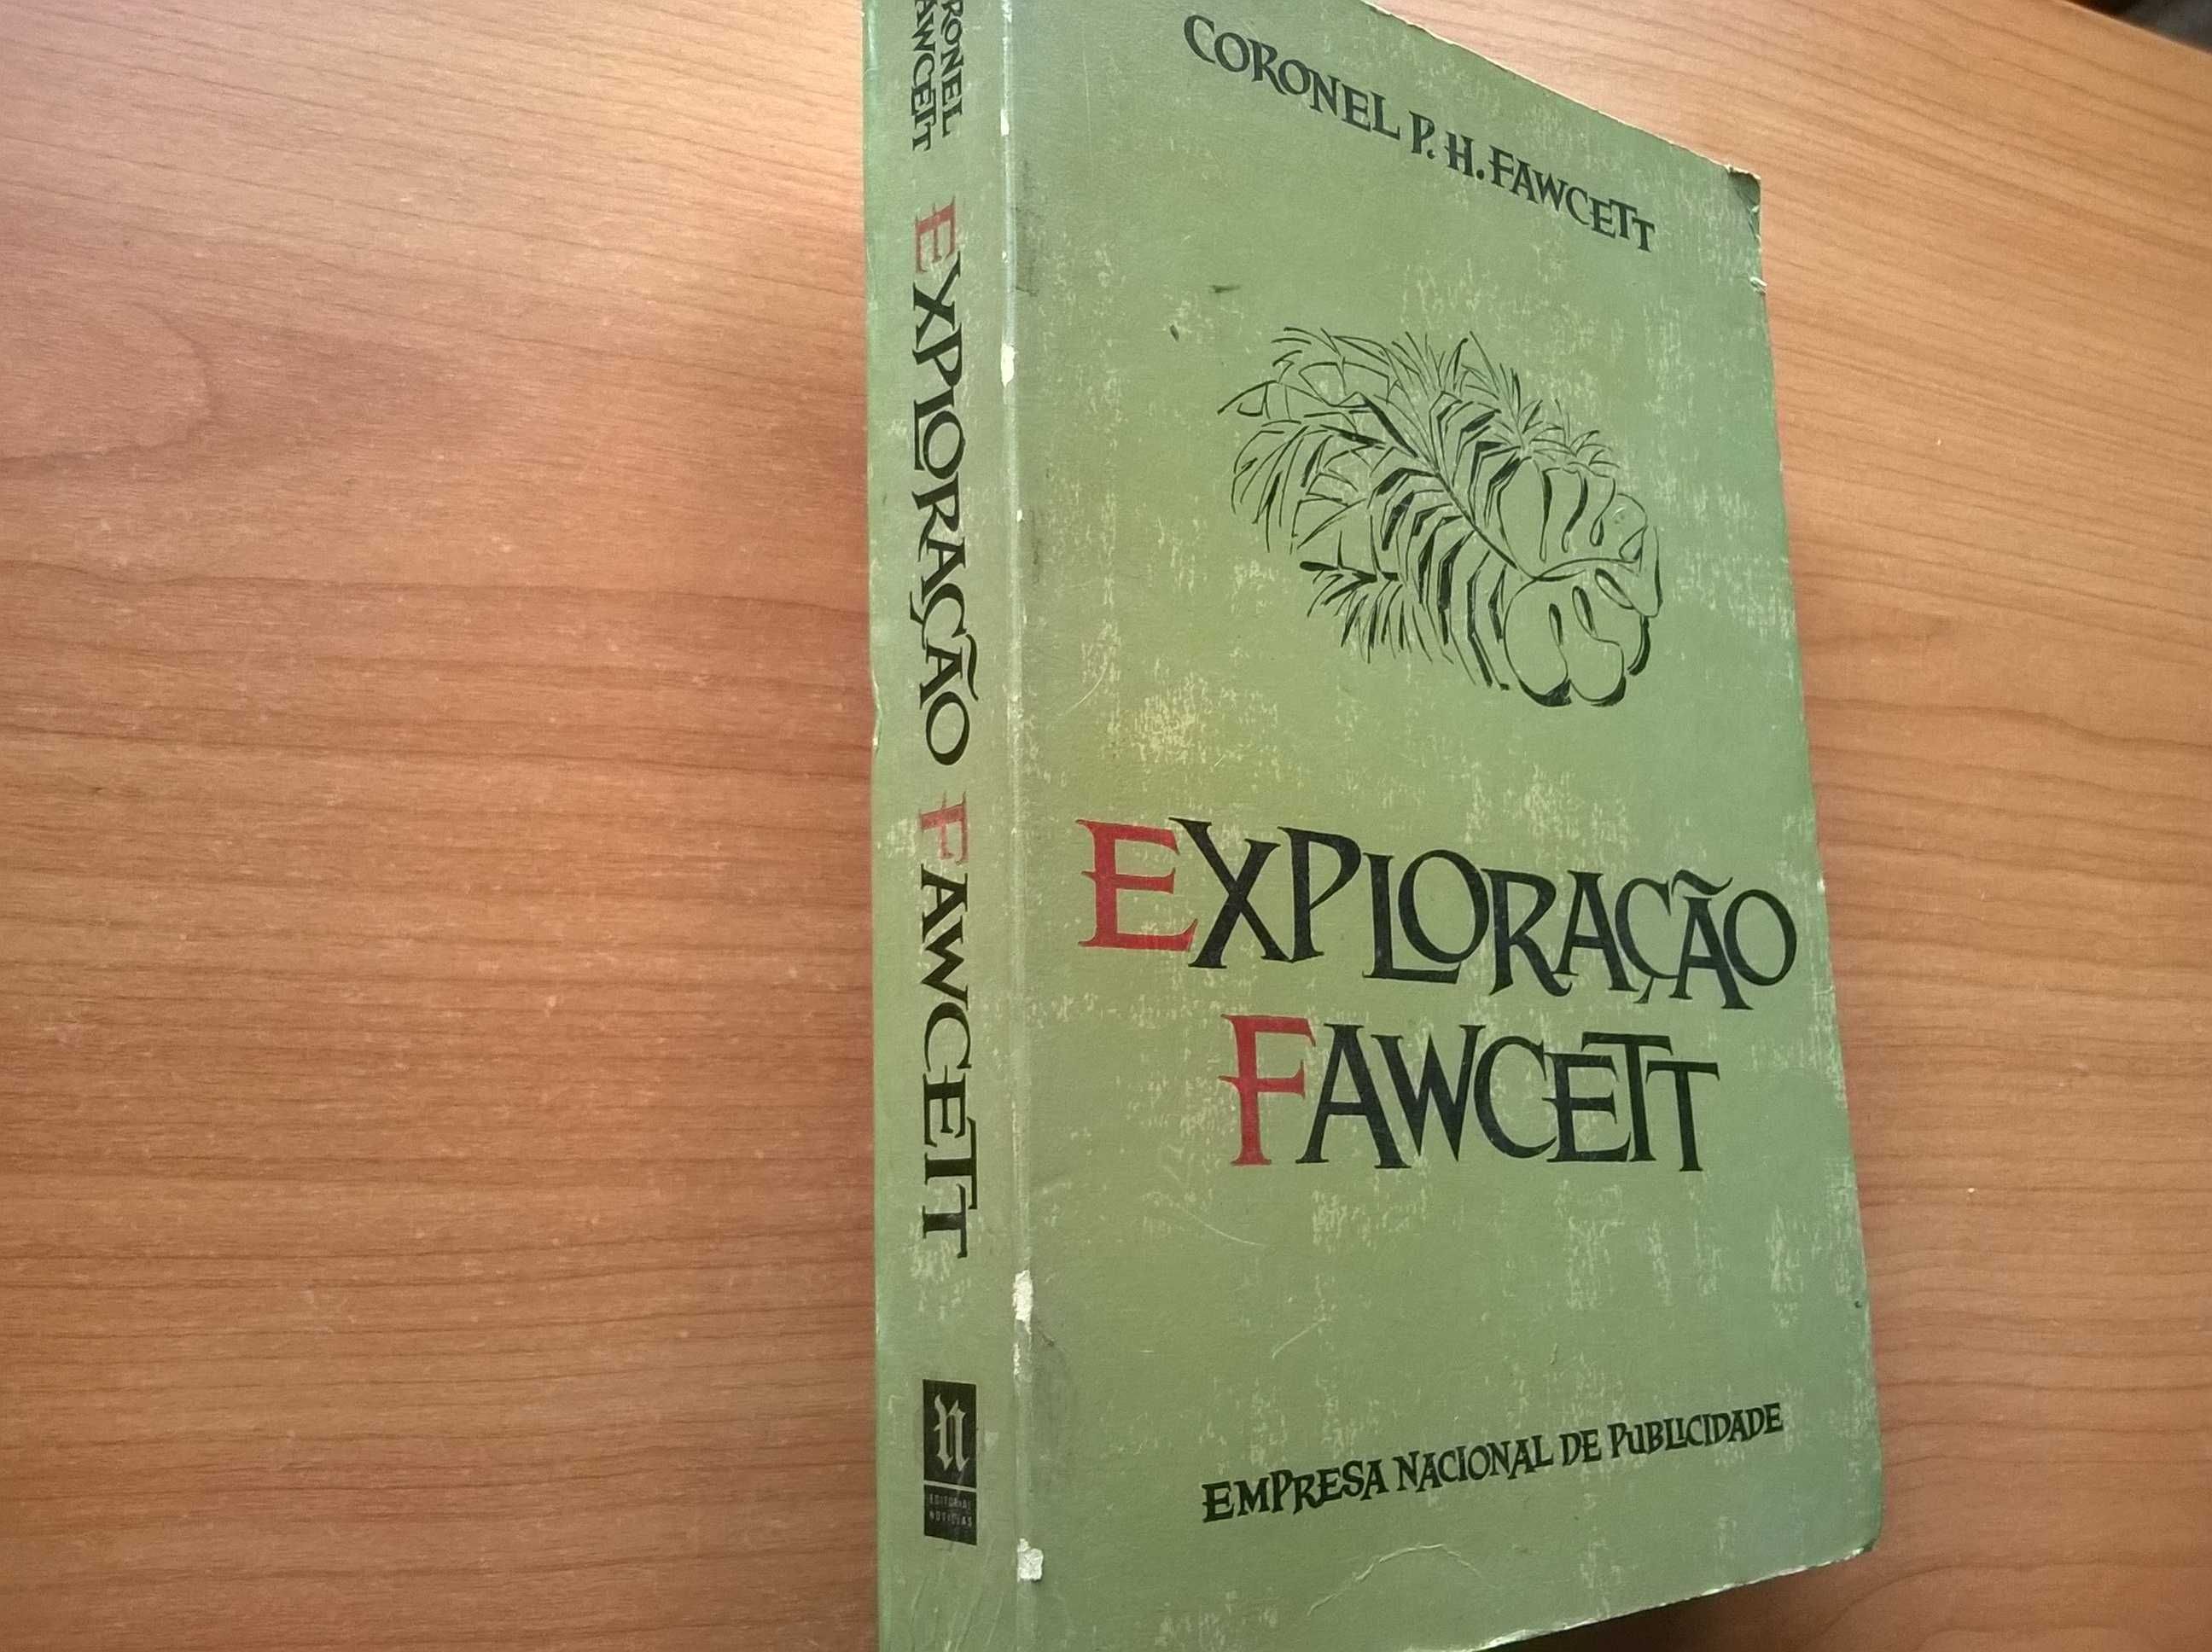 Exploração Fawcett - Coronel P. H. Fawcett